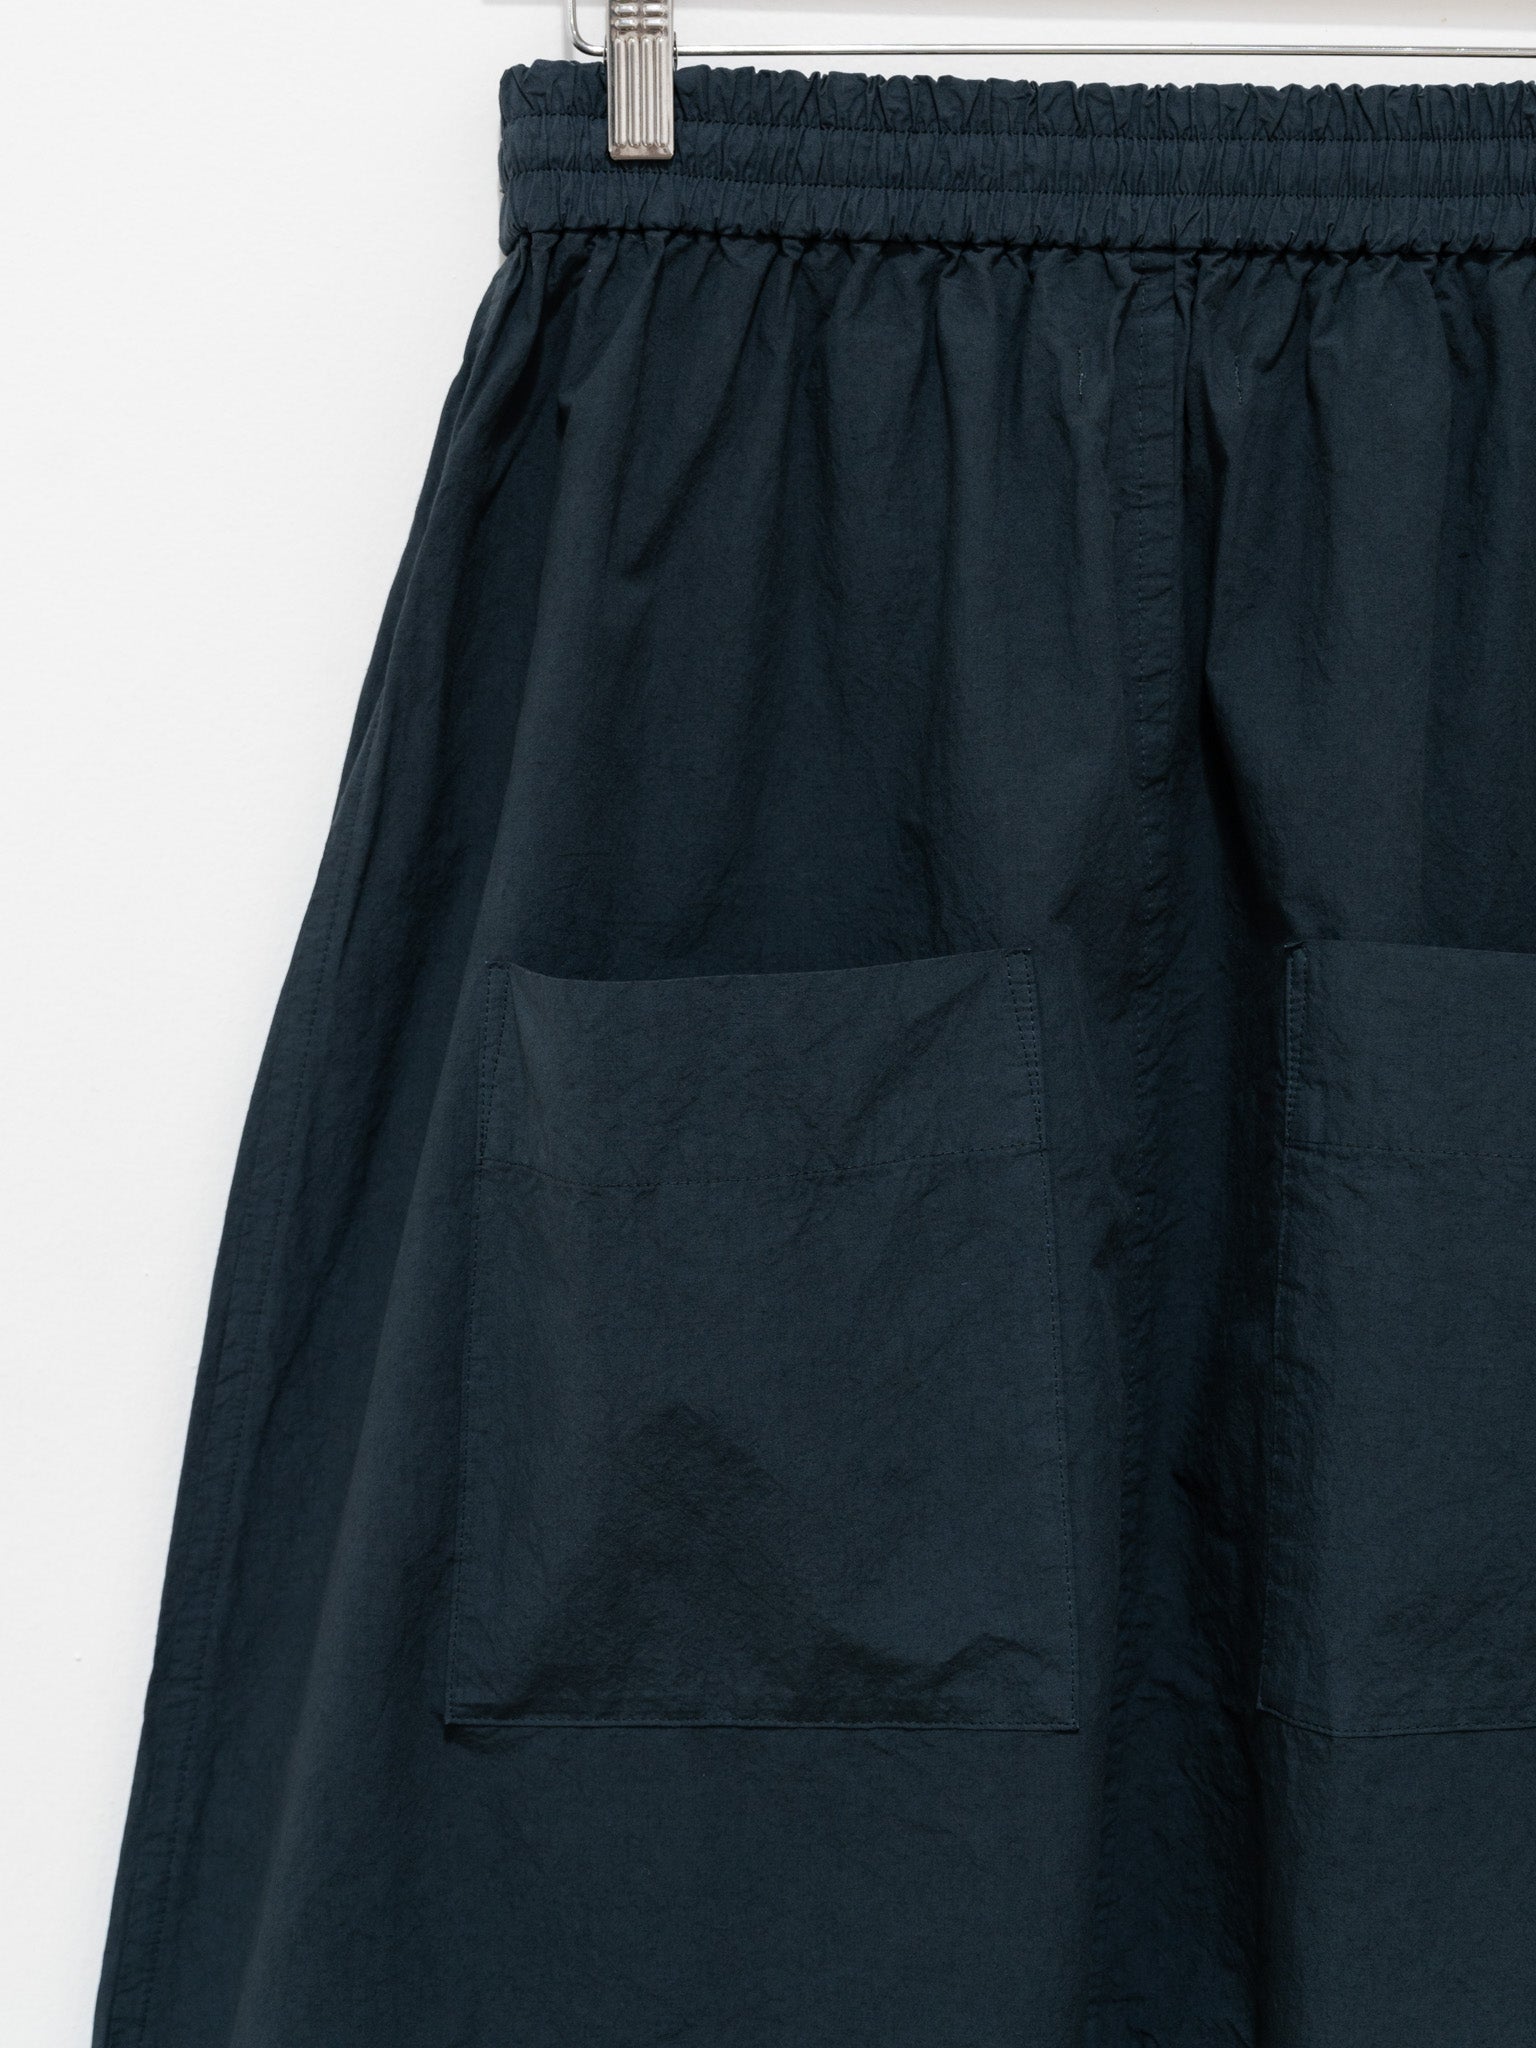 Namu Shop - Veritecoeur Gathered Skirt - Sumi Black